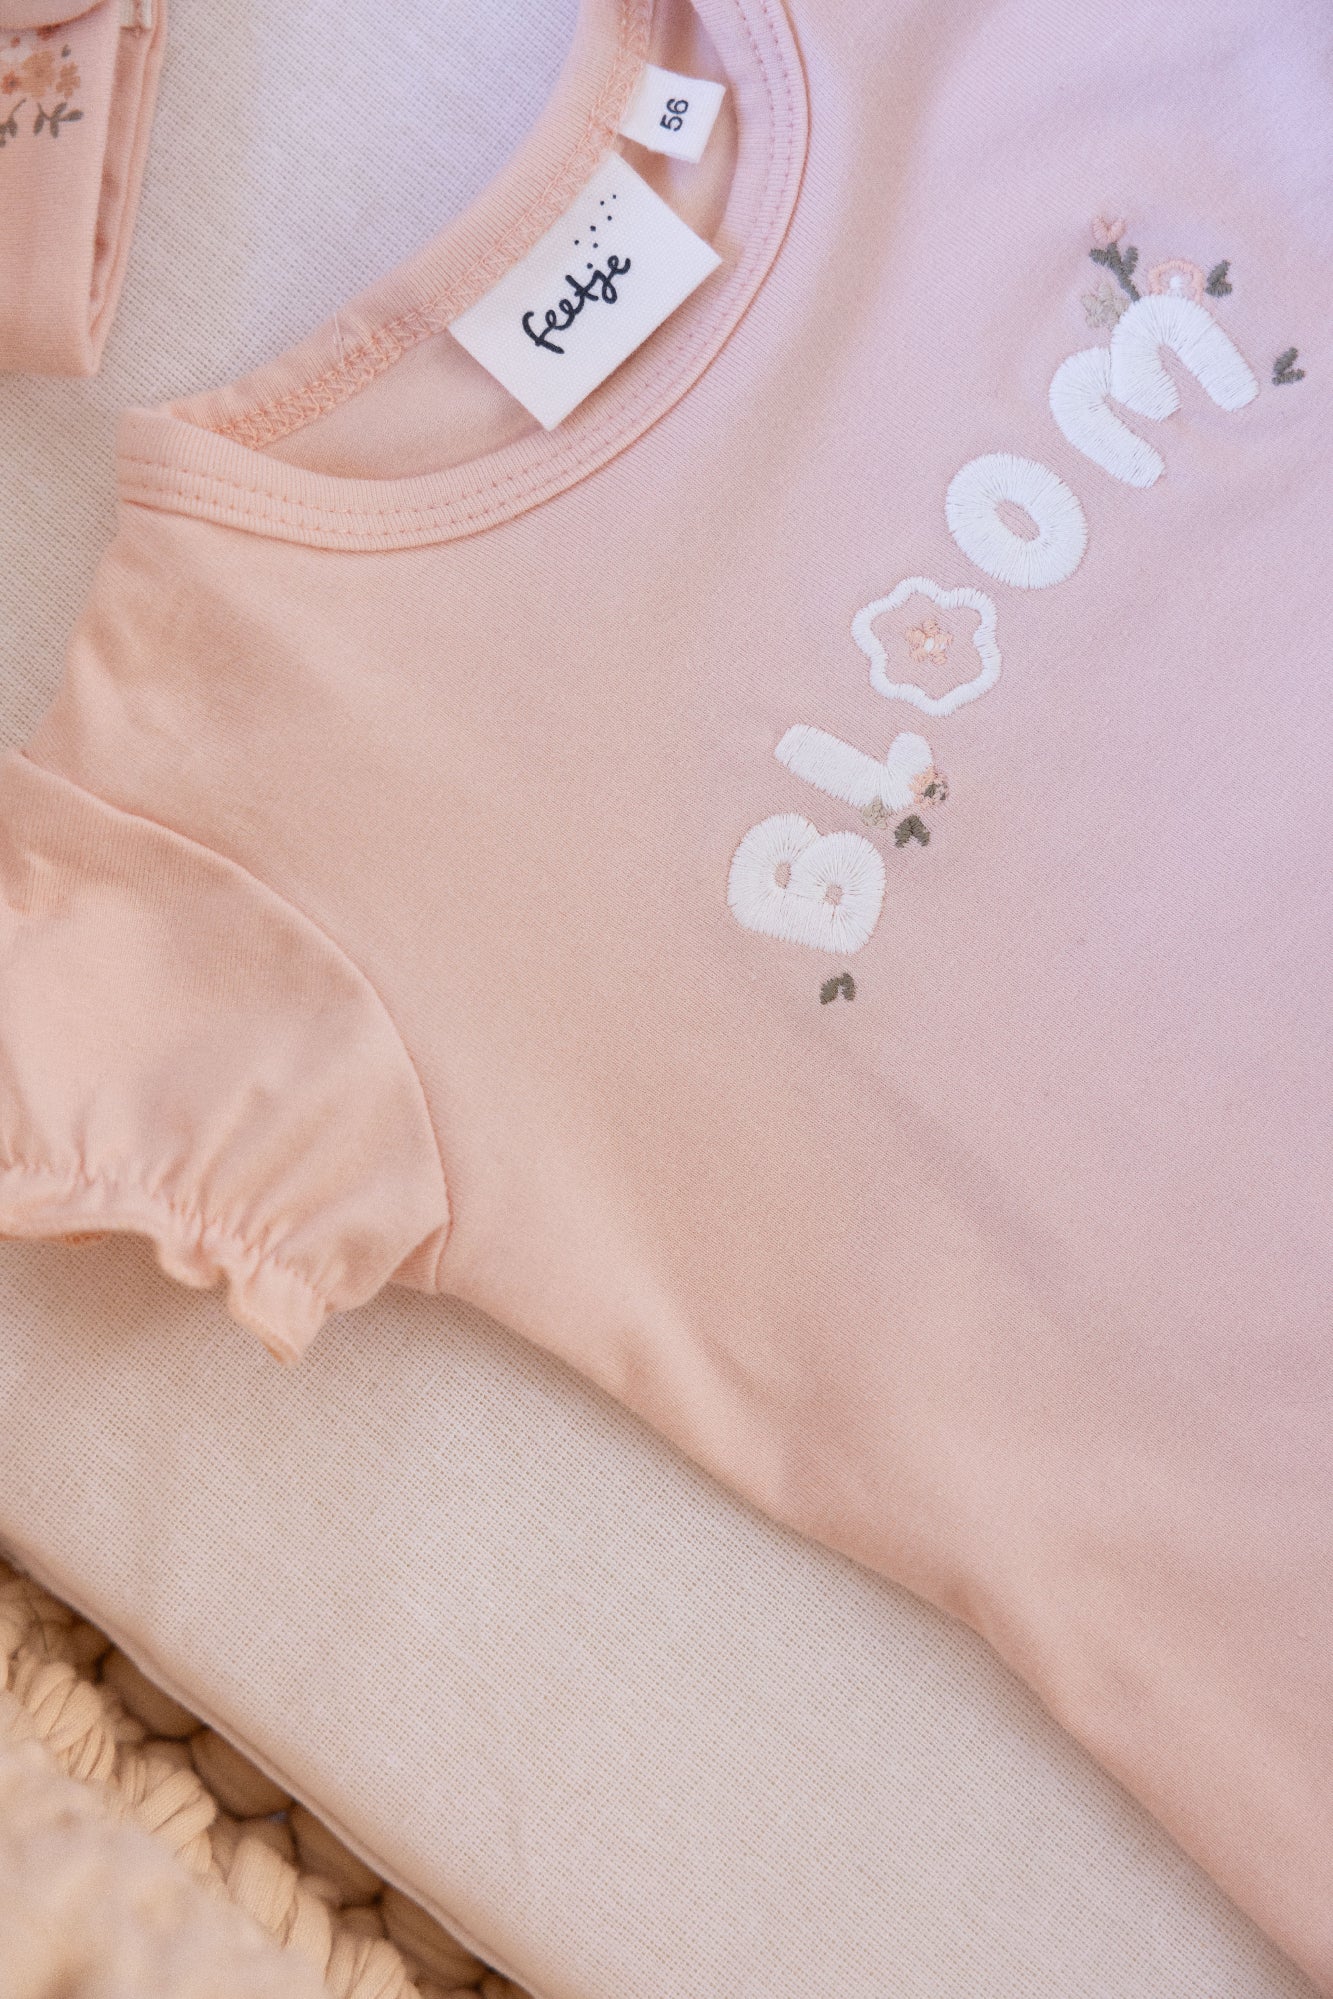 Meisjes T-shirt - Bloom With Love van Feetje in de kleur Roze in maat 86.